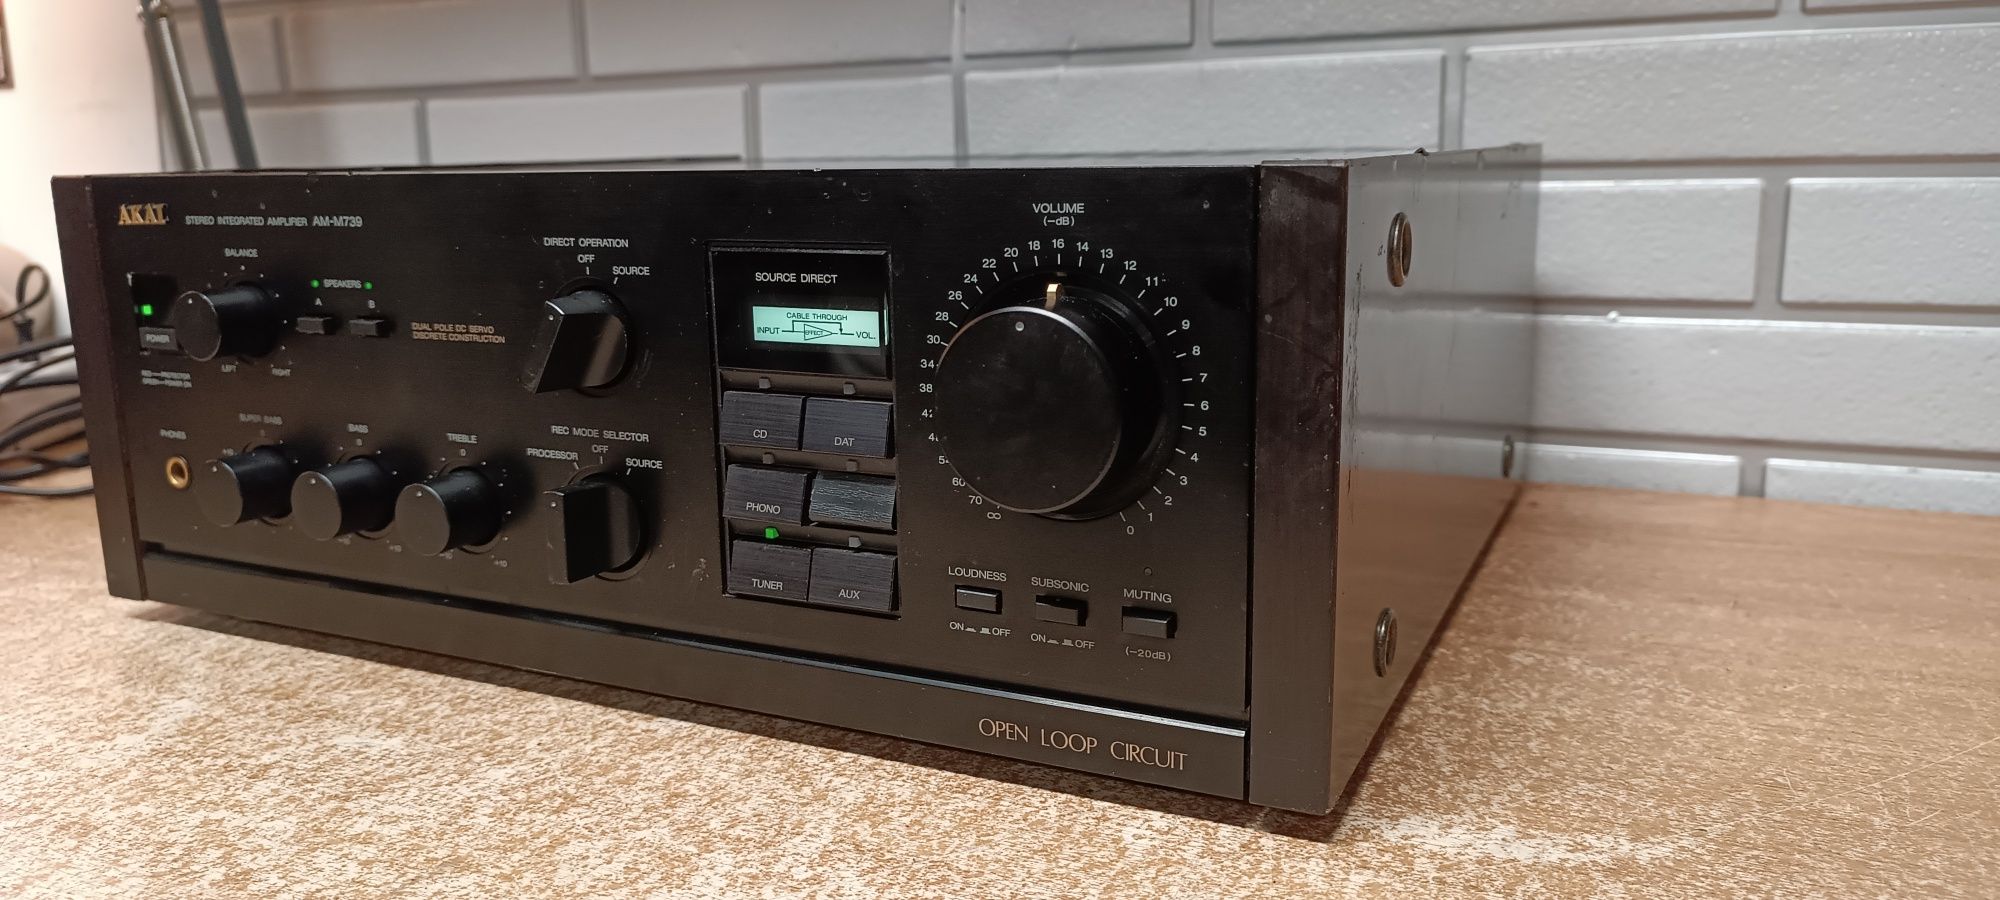 Wzmacniacz hi-fi stereo AKAI AM-A739. Japan